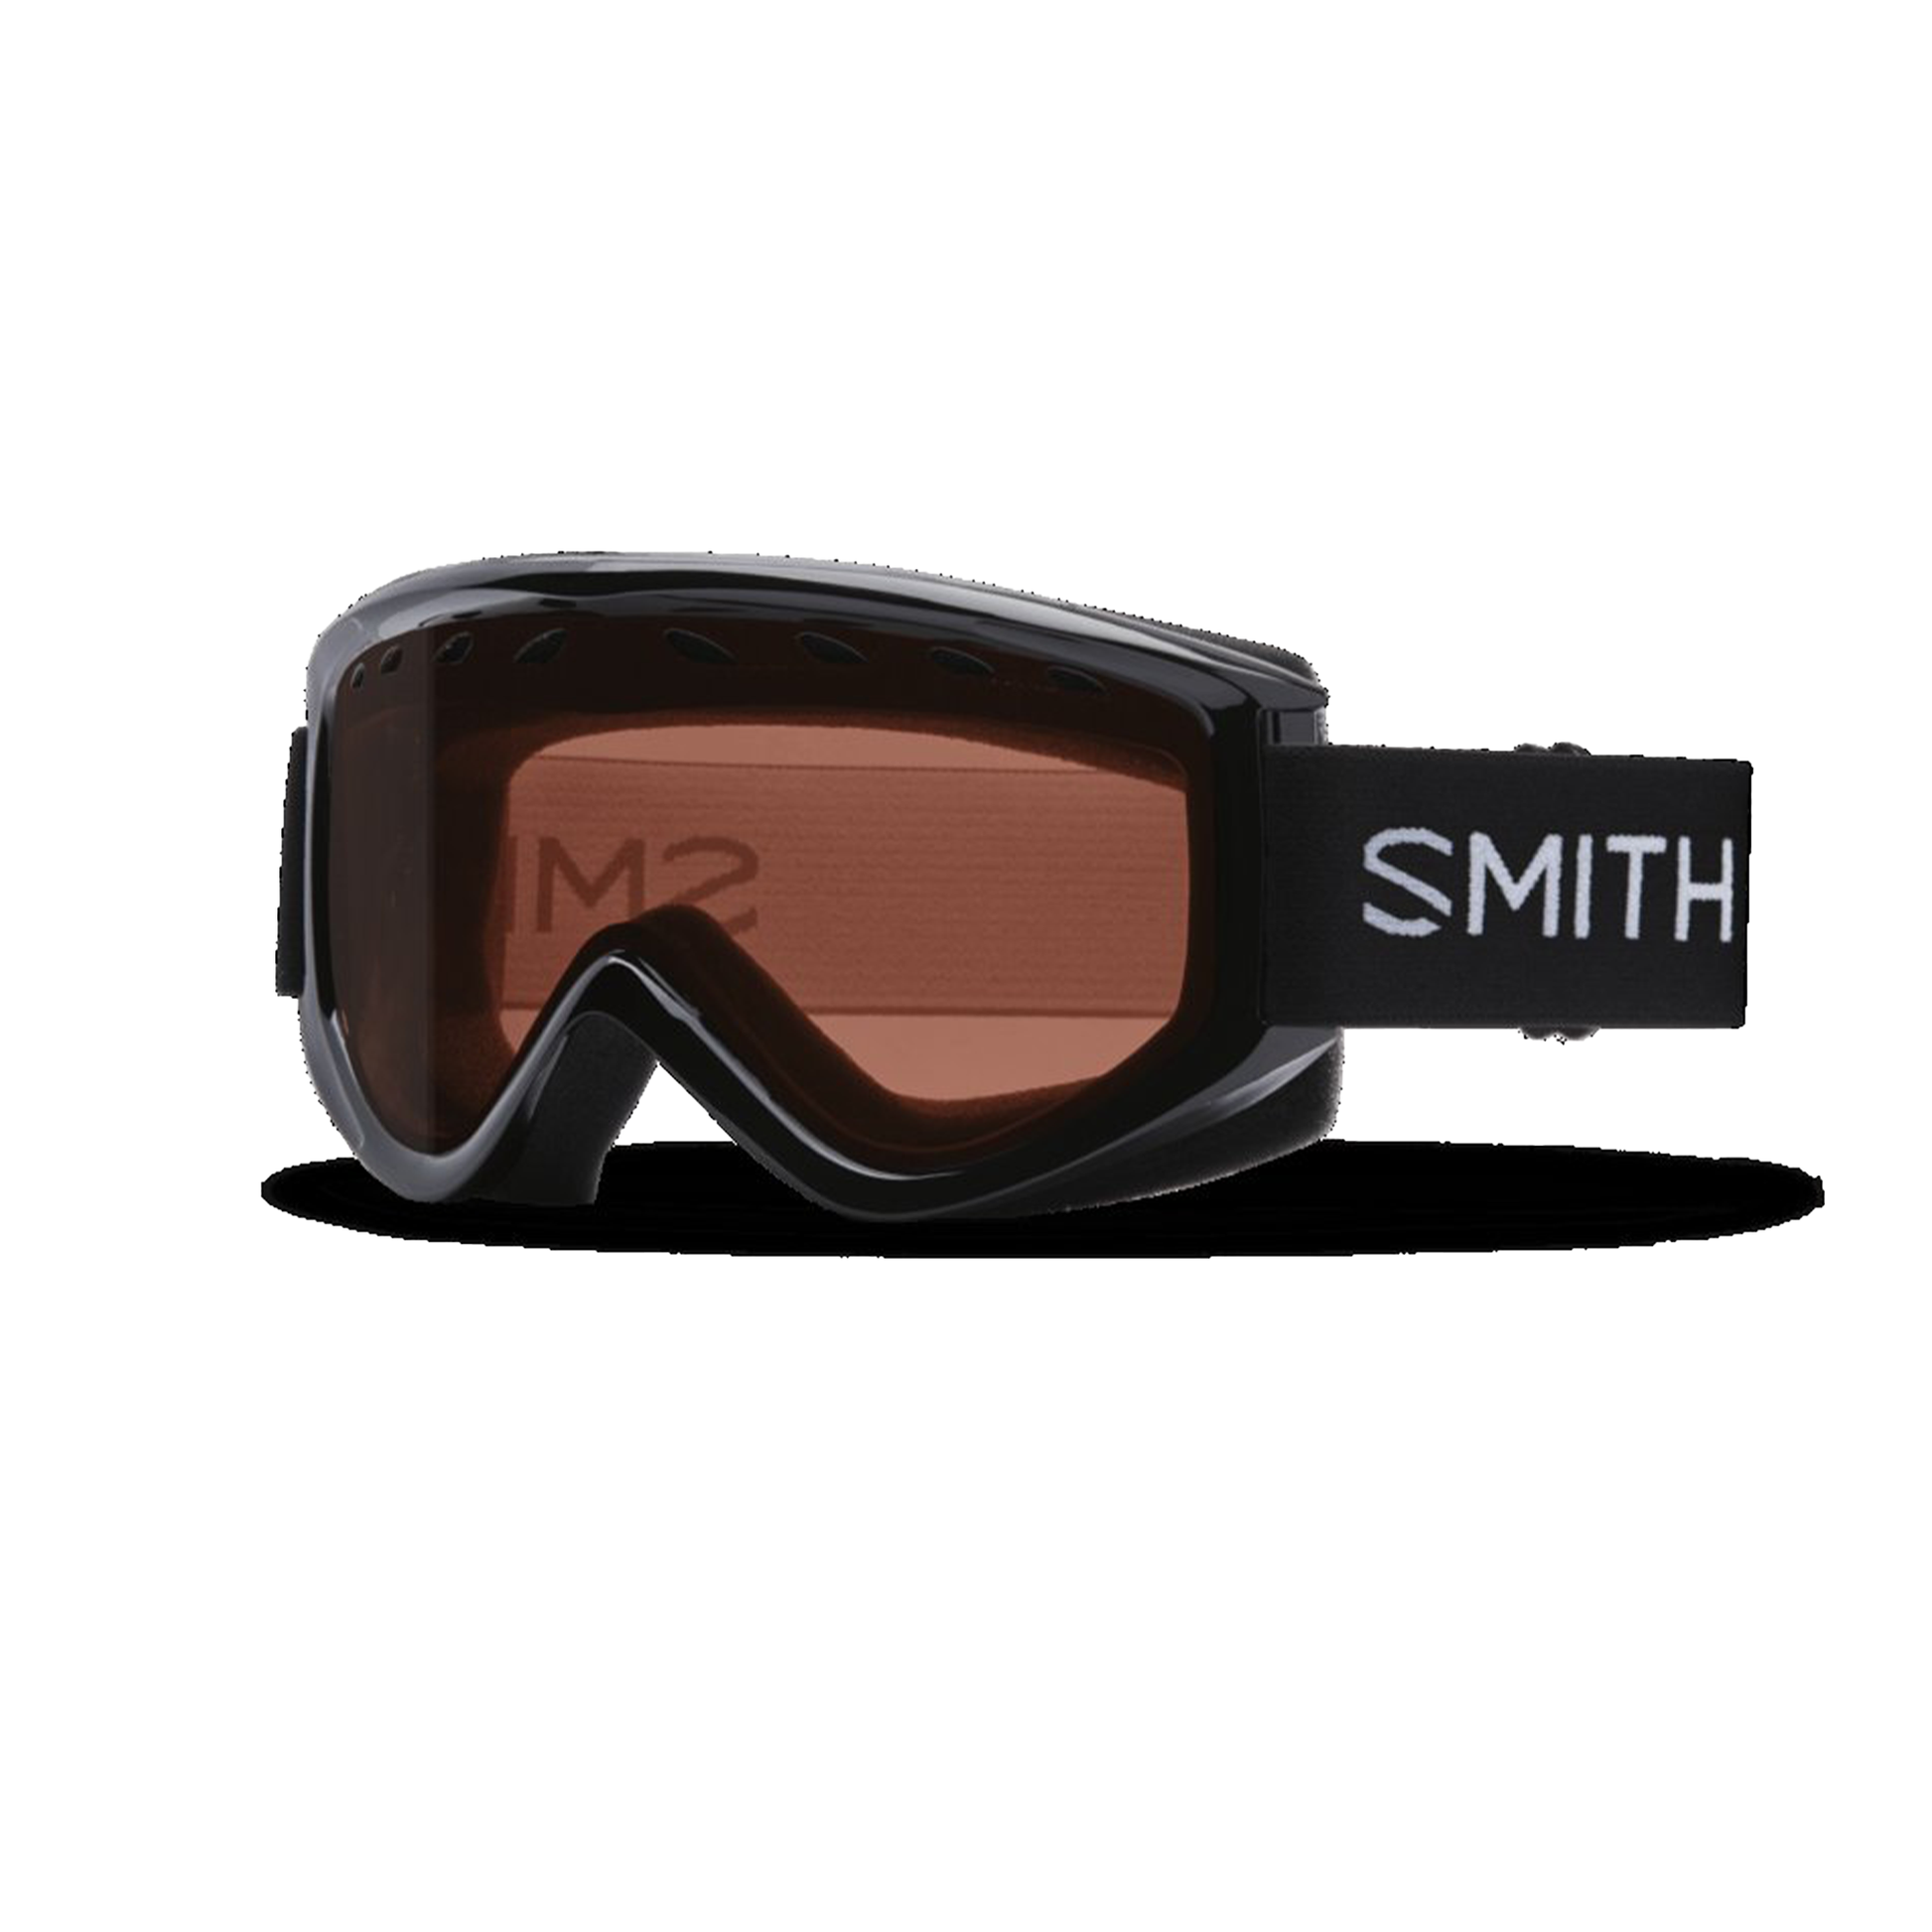 Smith Women's Electra Snow Goggle Black RC36 - Smith Snow Goggles